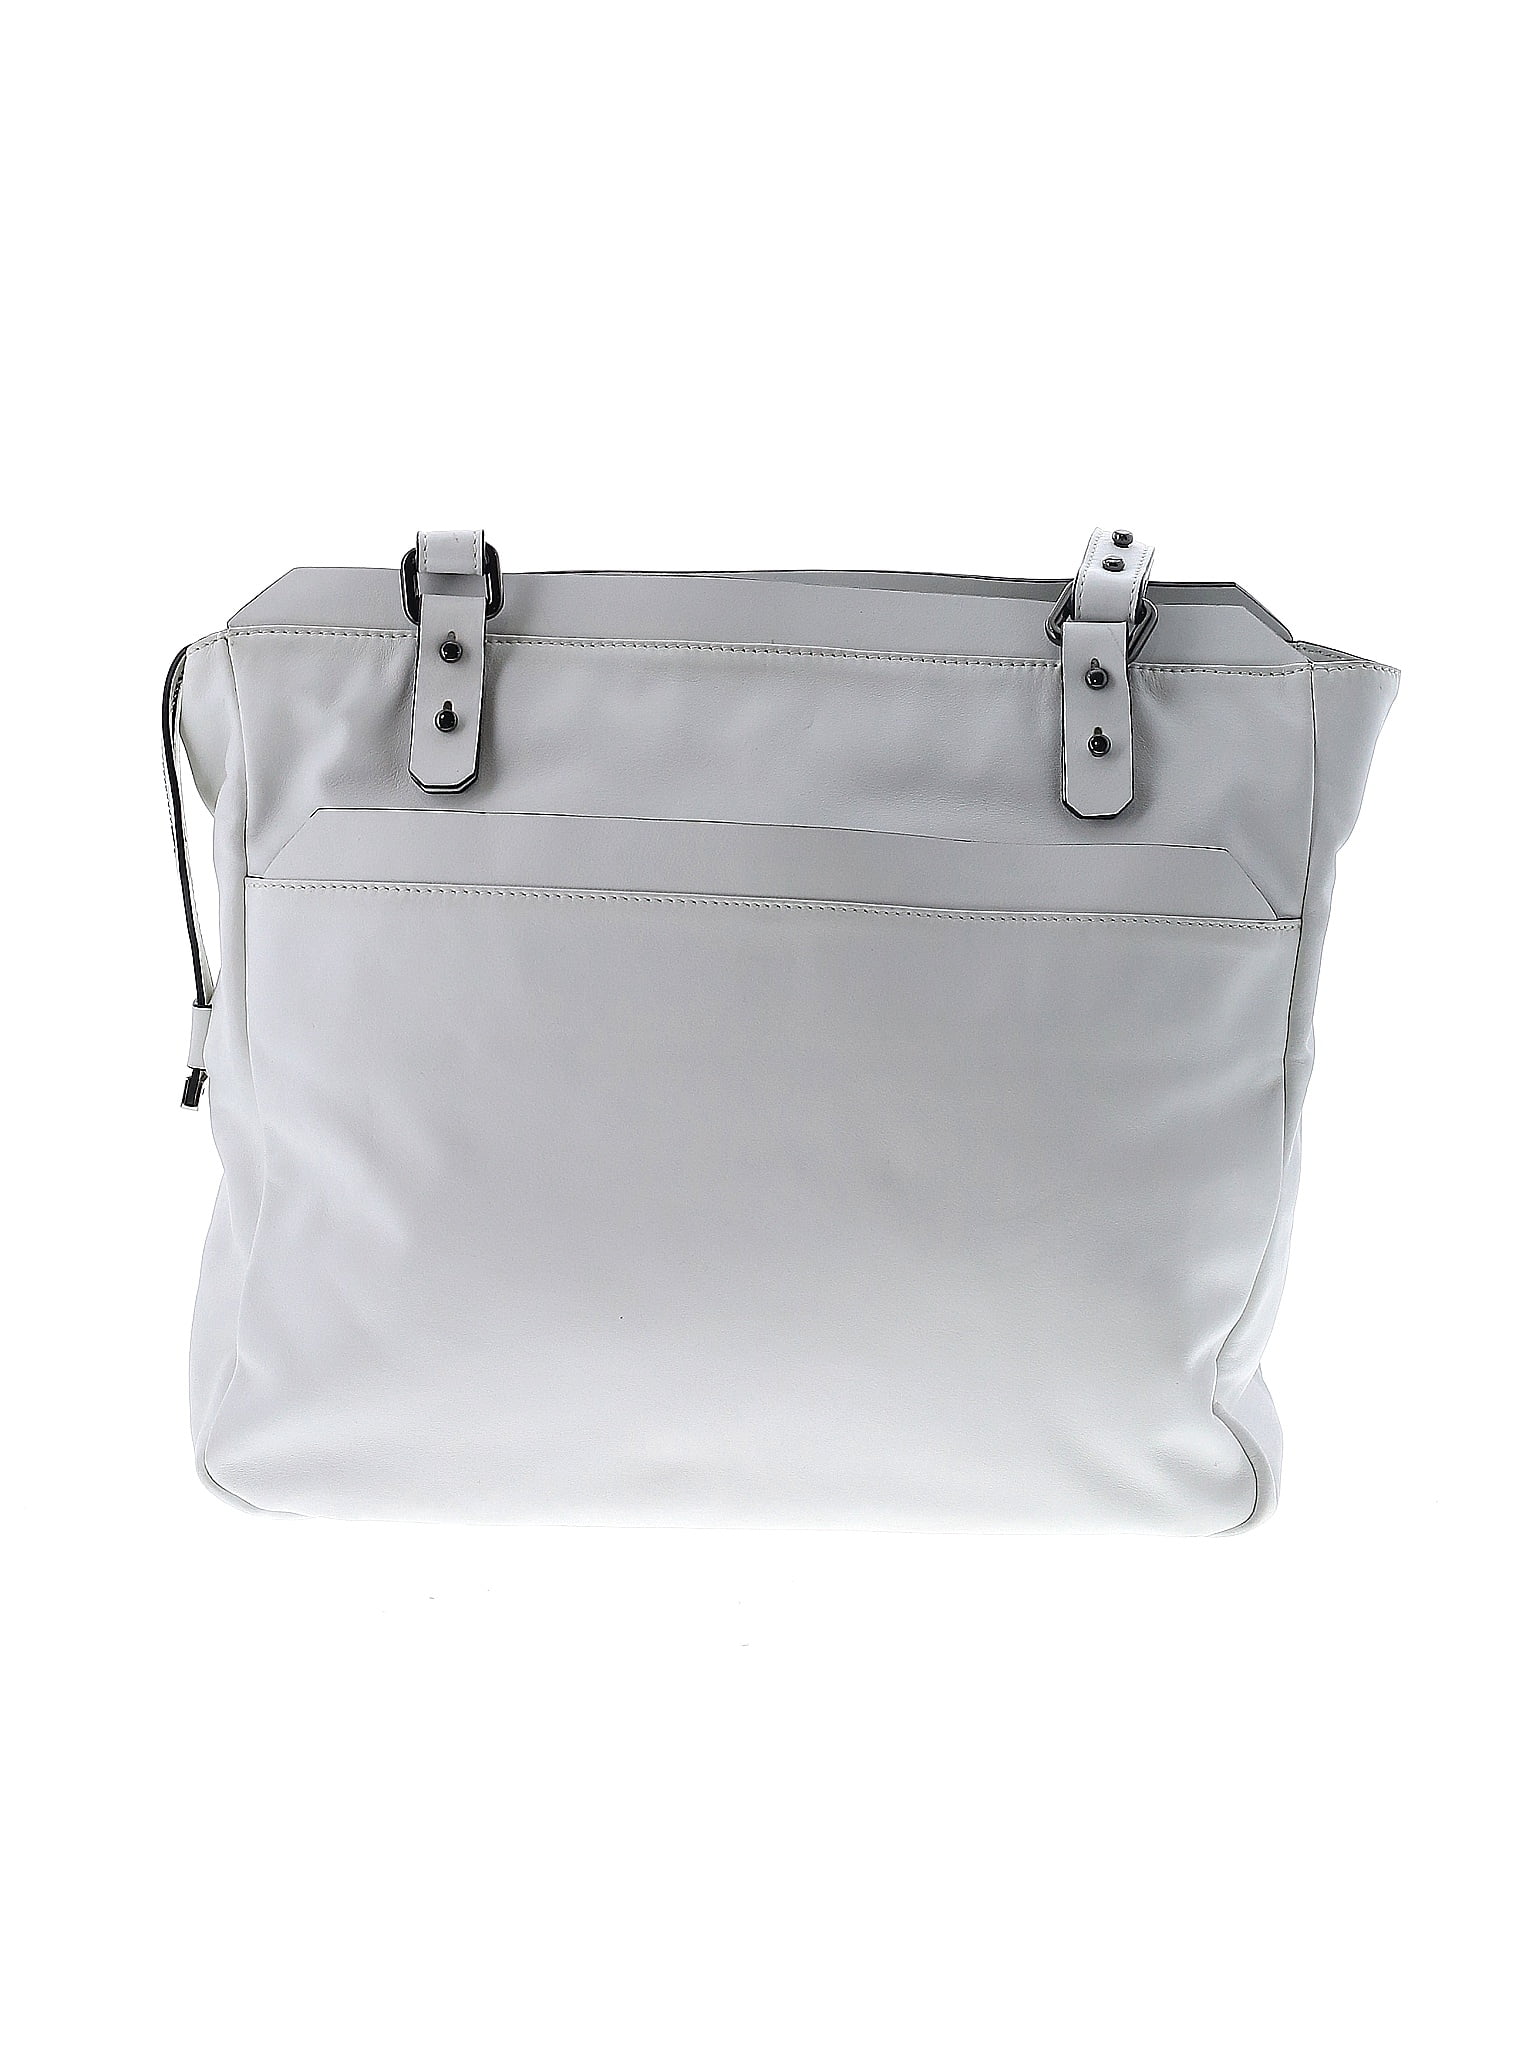 Women's Handbags - Black Leather Tote Medium Size By Halston Heritage  $160